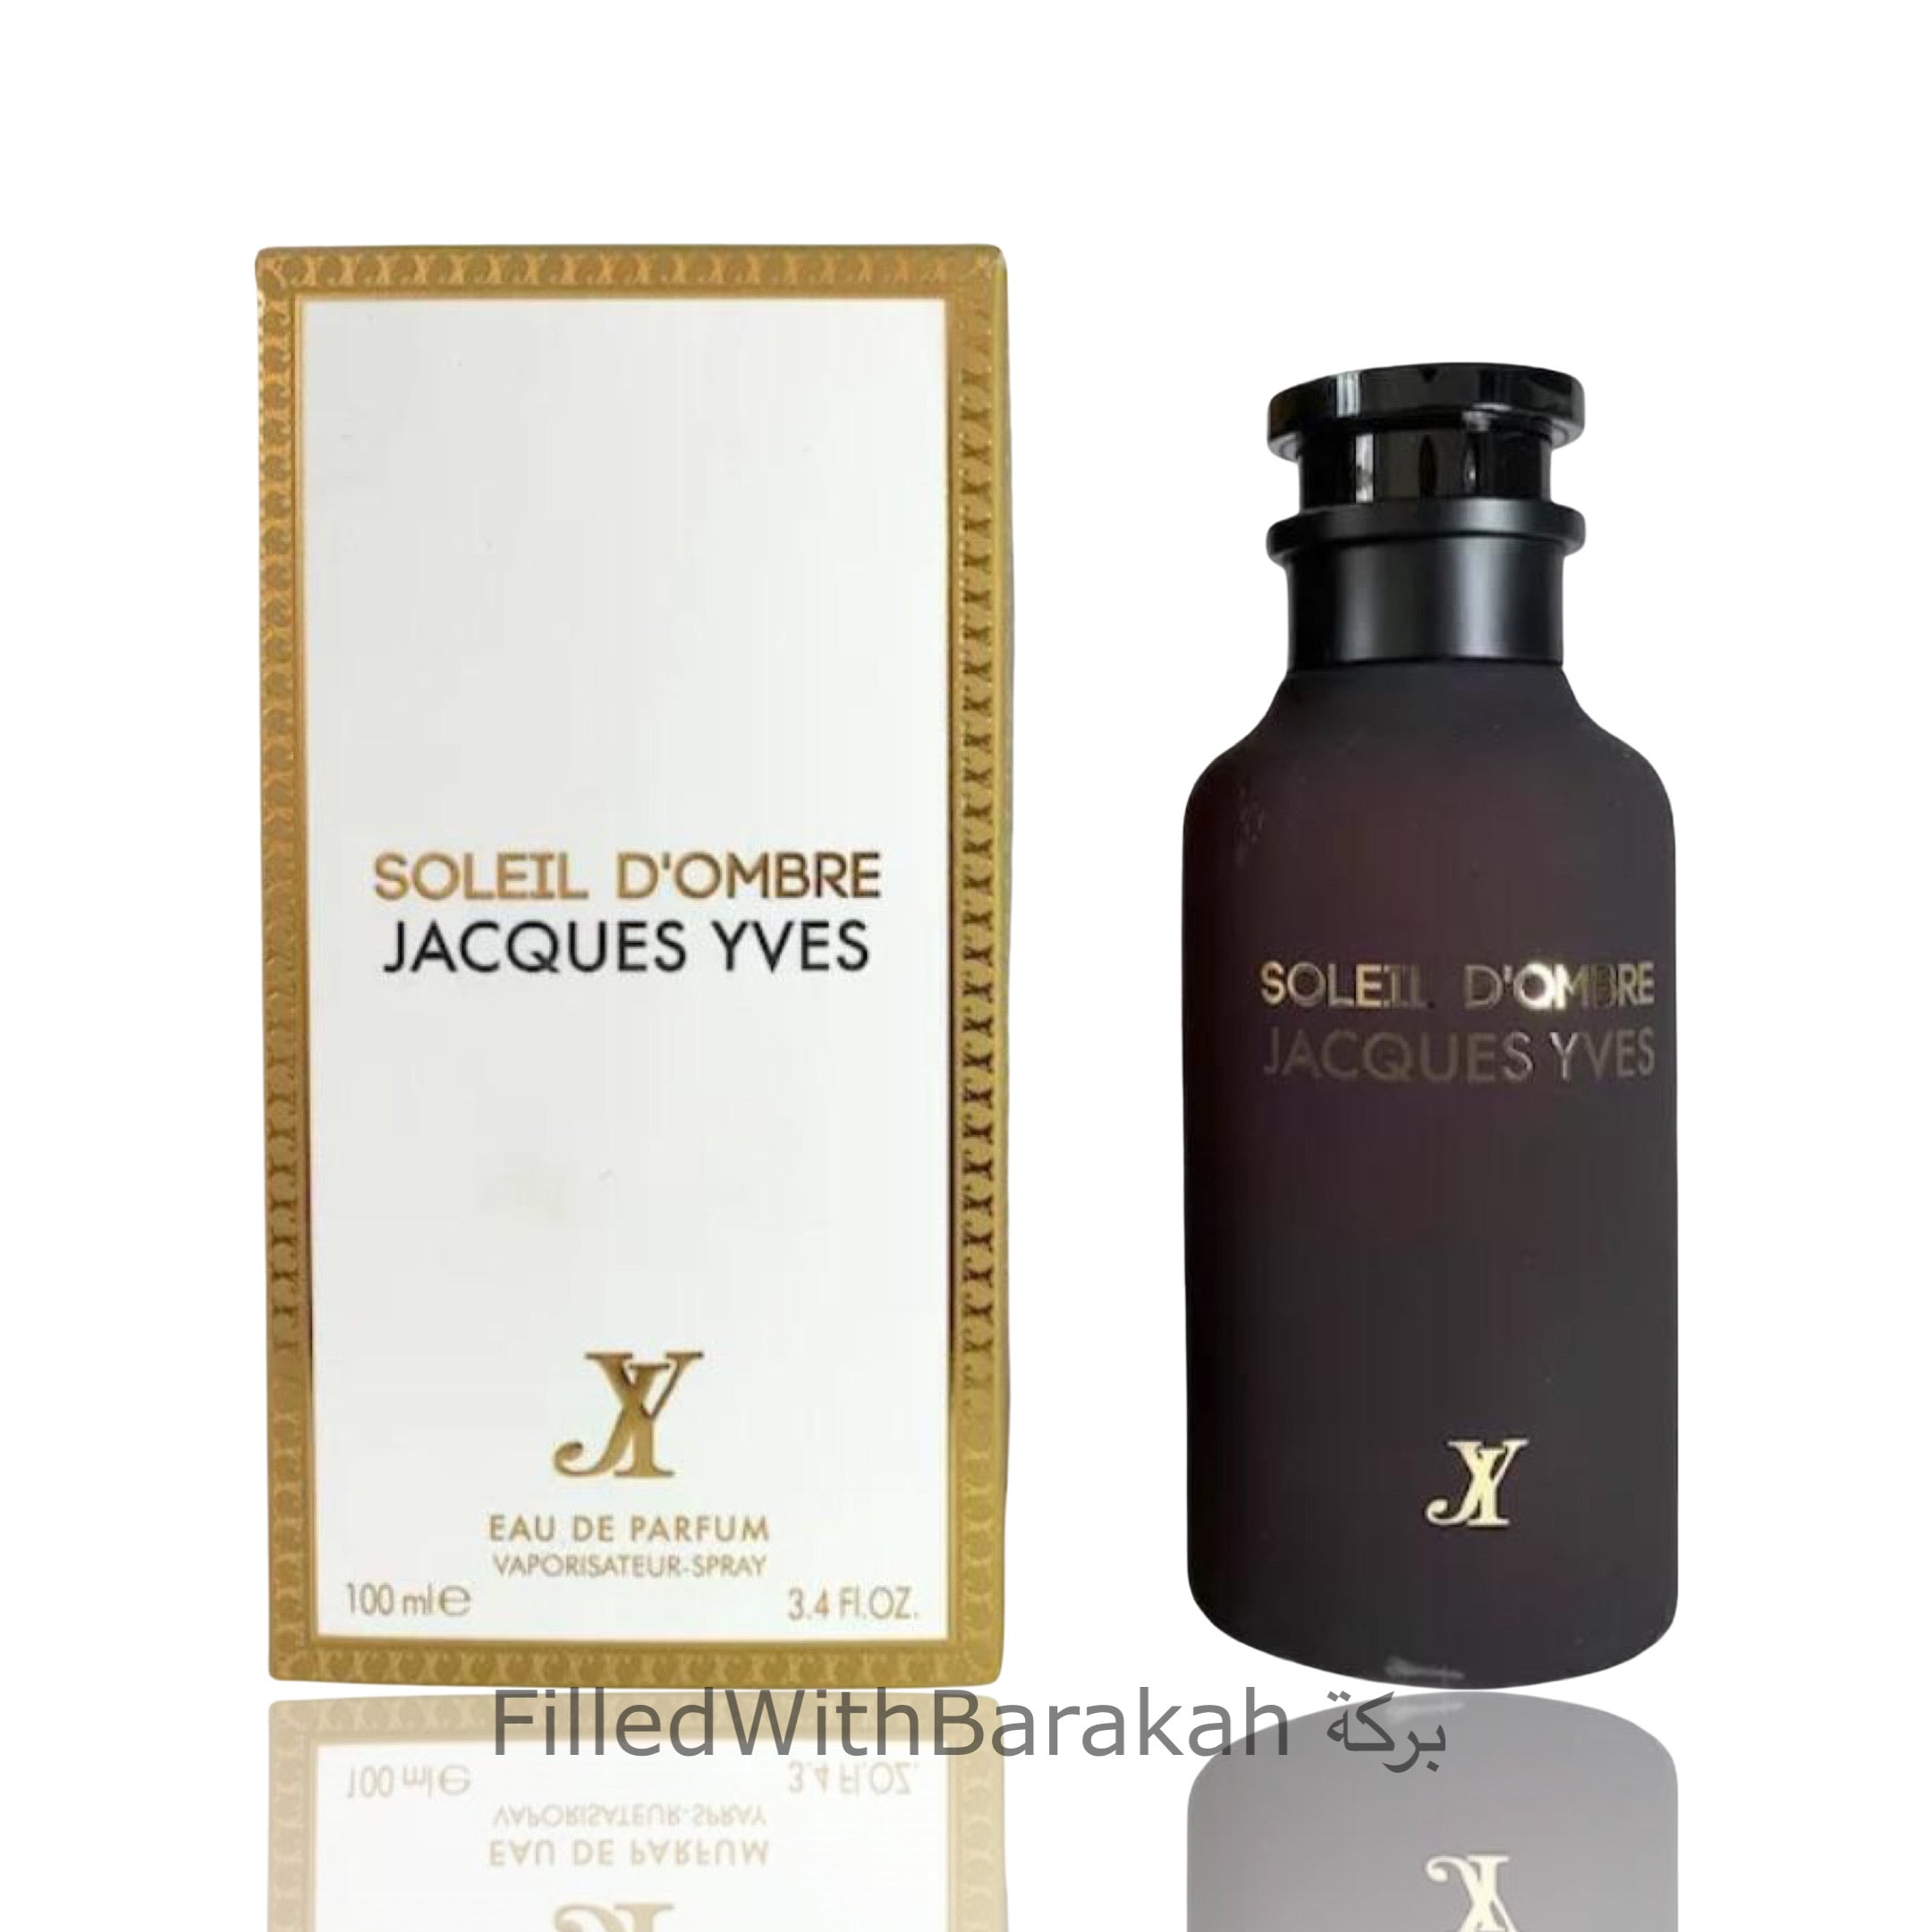 Louis Vuitton Fleur du Desert Perfume, Eau De Parfum 3.4 oz/100 ml Spray